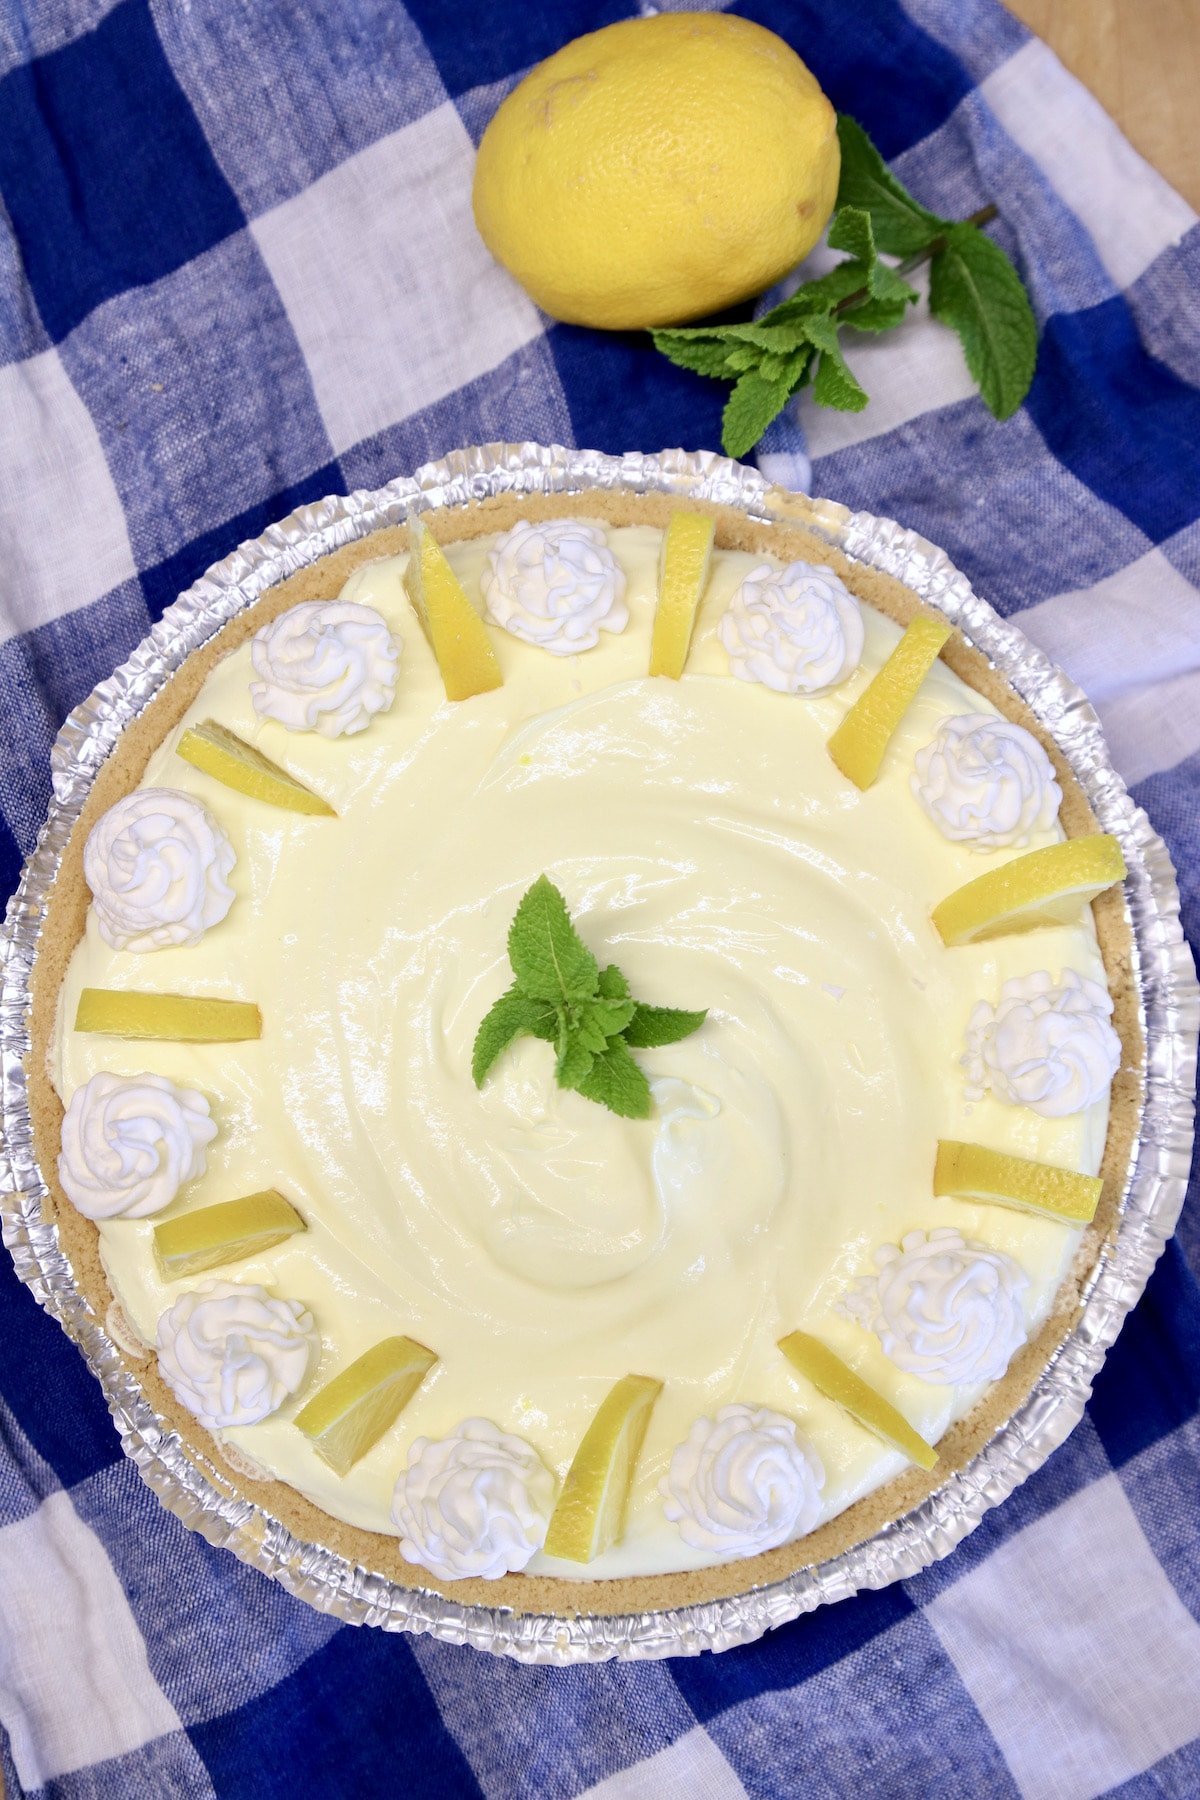 No Bake Lemon Pie with lemon and mint garnish.